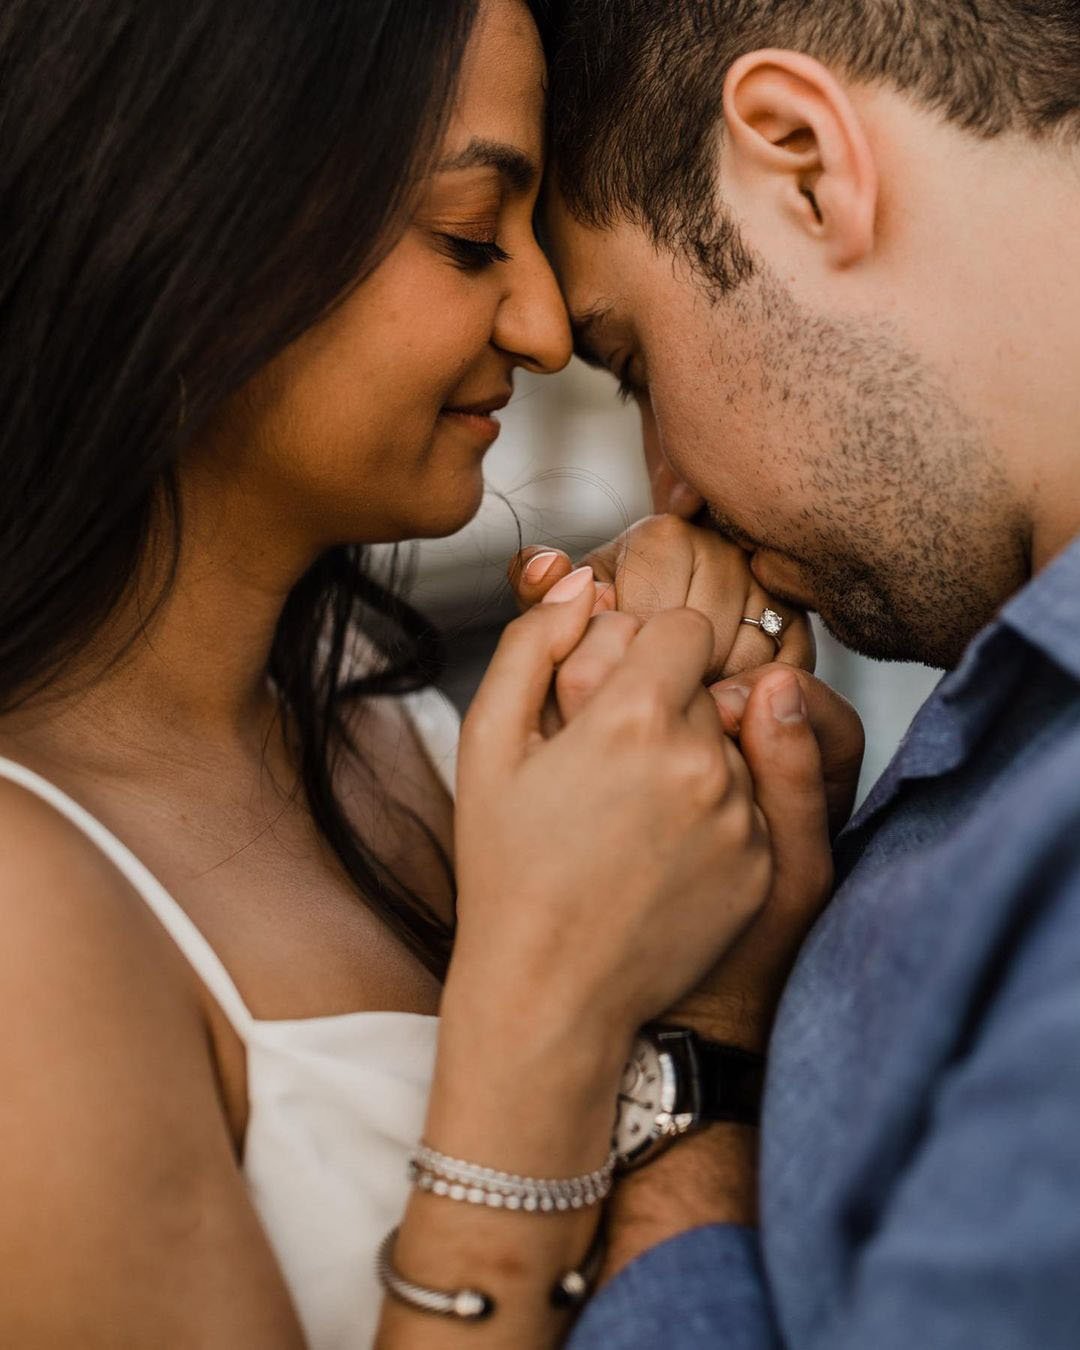 engagement announcements photo man kissing womans hand